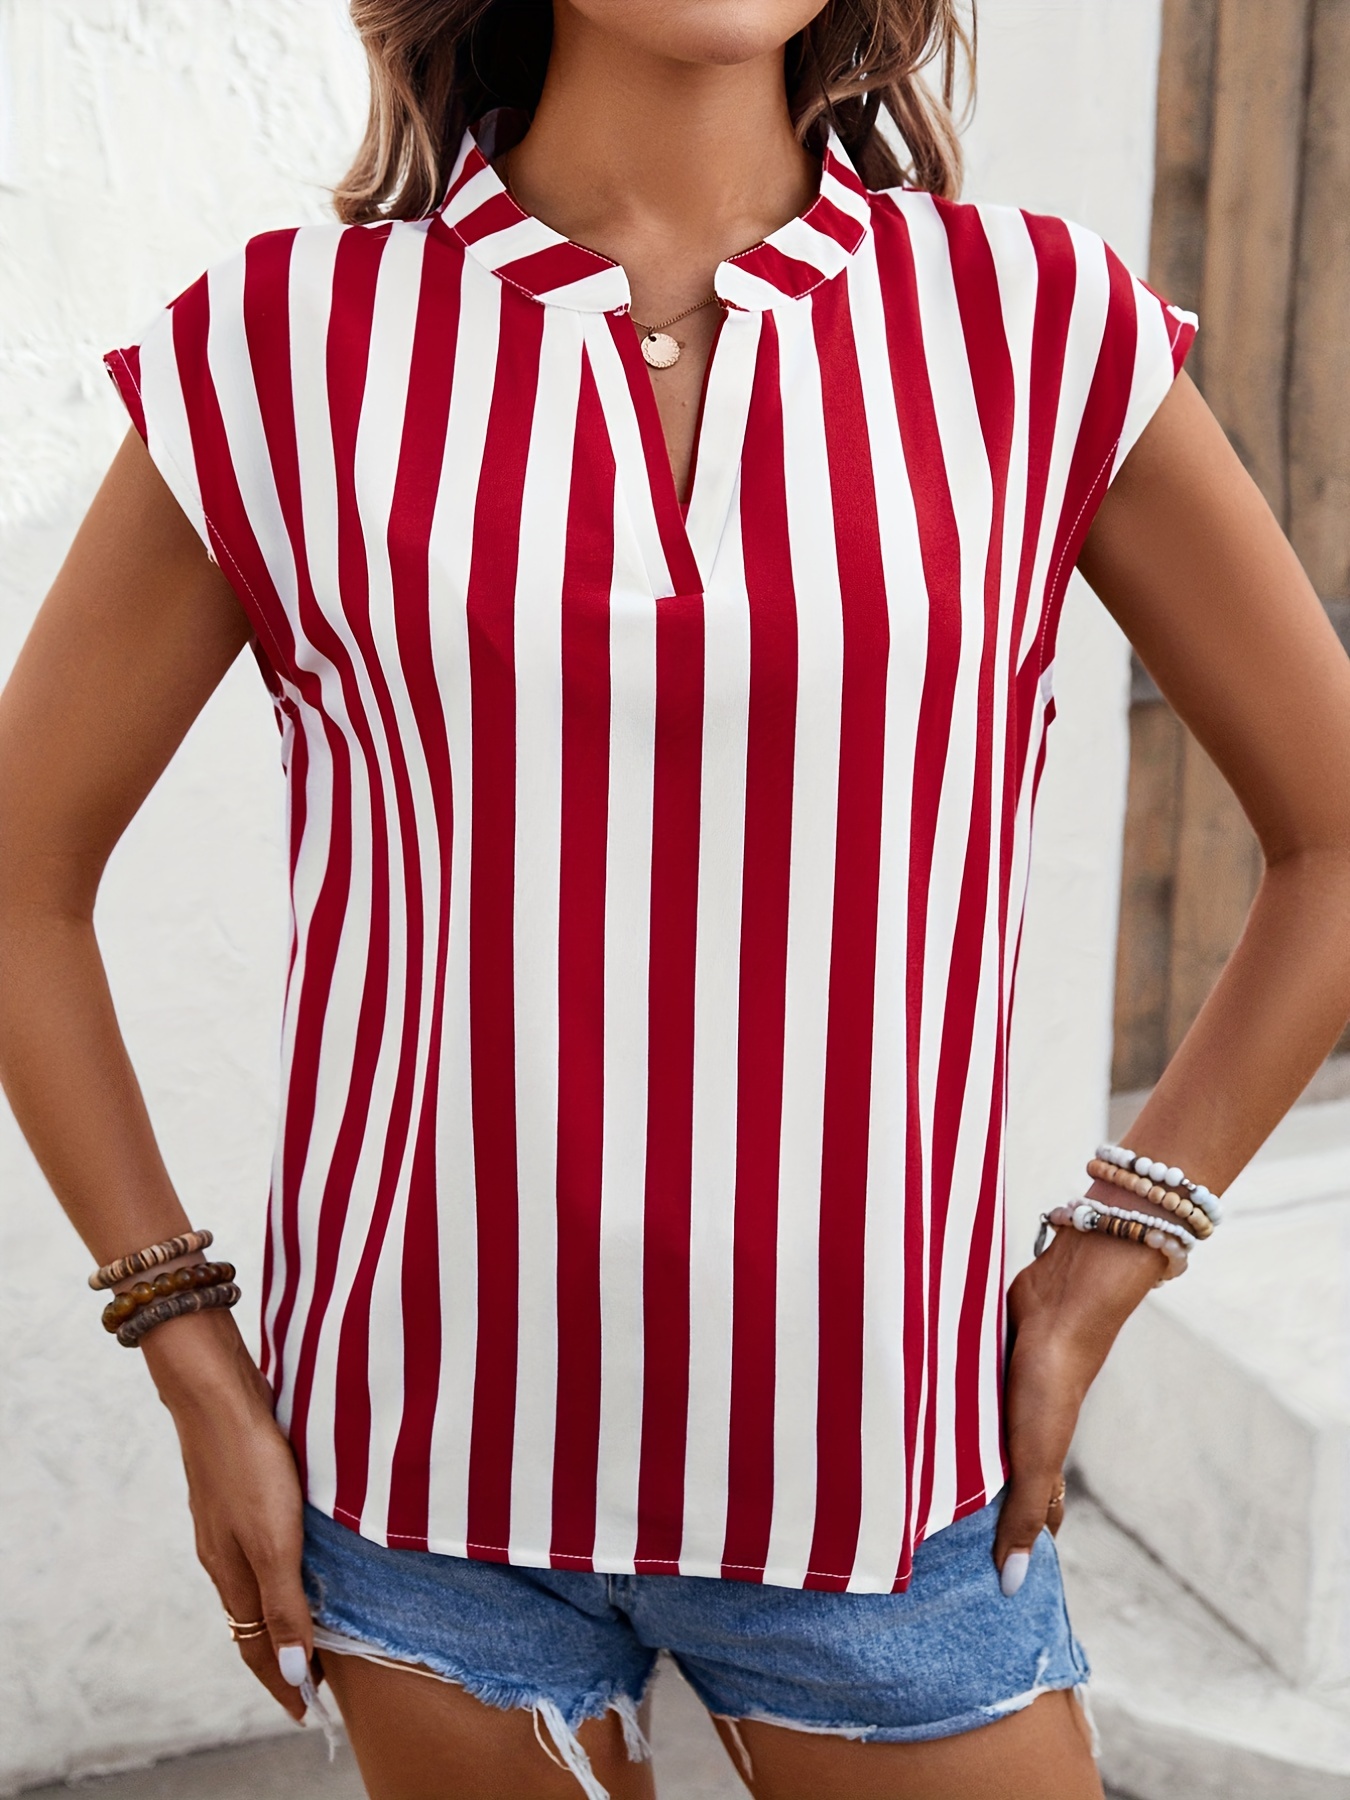 Women Blouses Women White V Neck Tshirt Striped Red and White